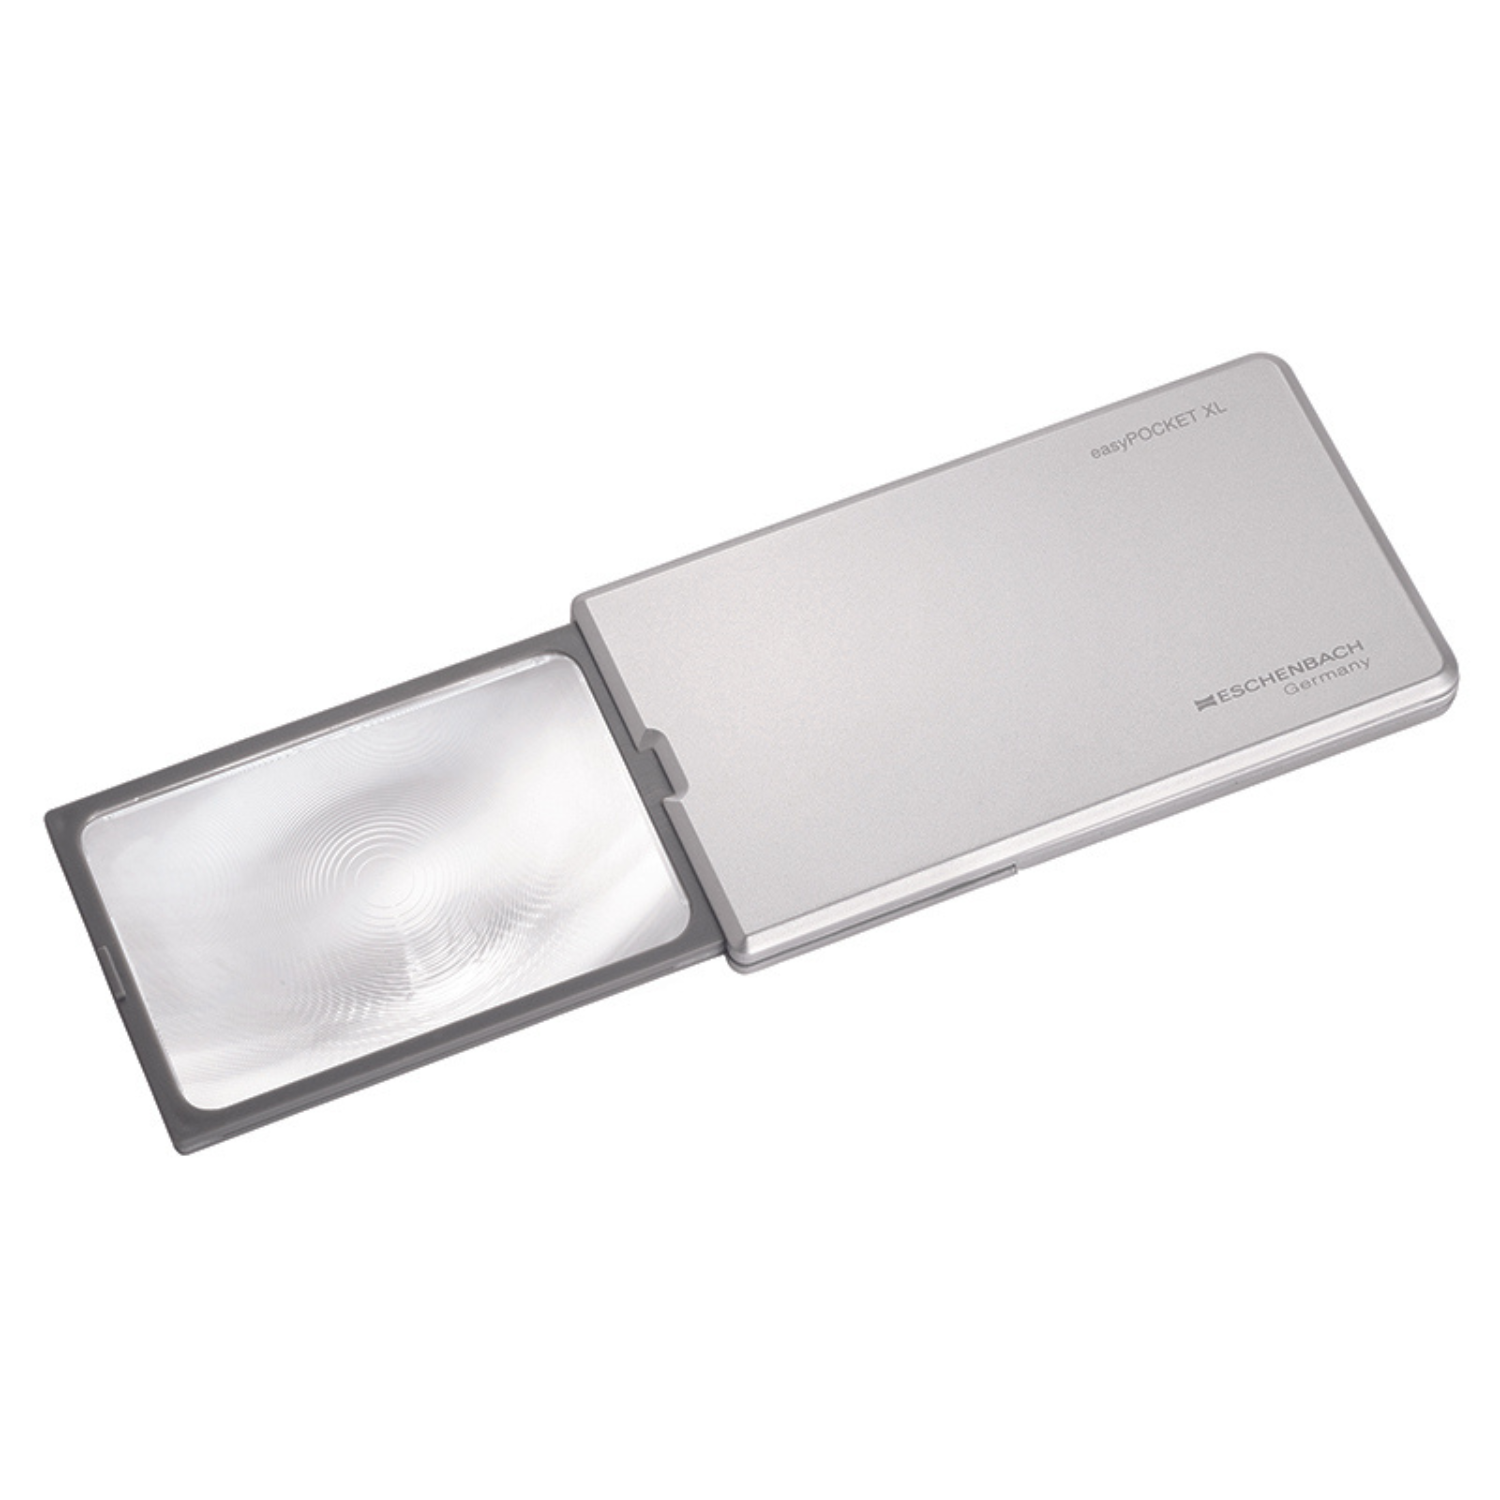 Royal SM10 Handheld Illuminated Pocket Magnifier, Pack of 2